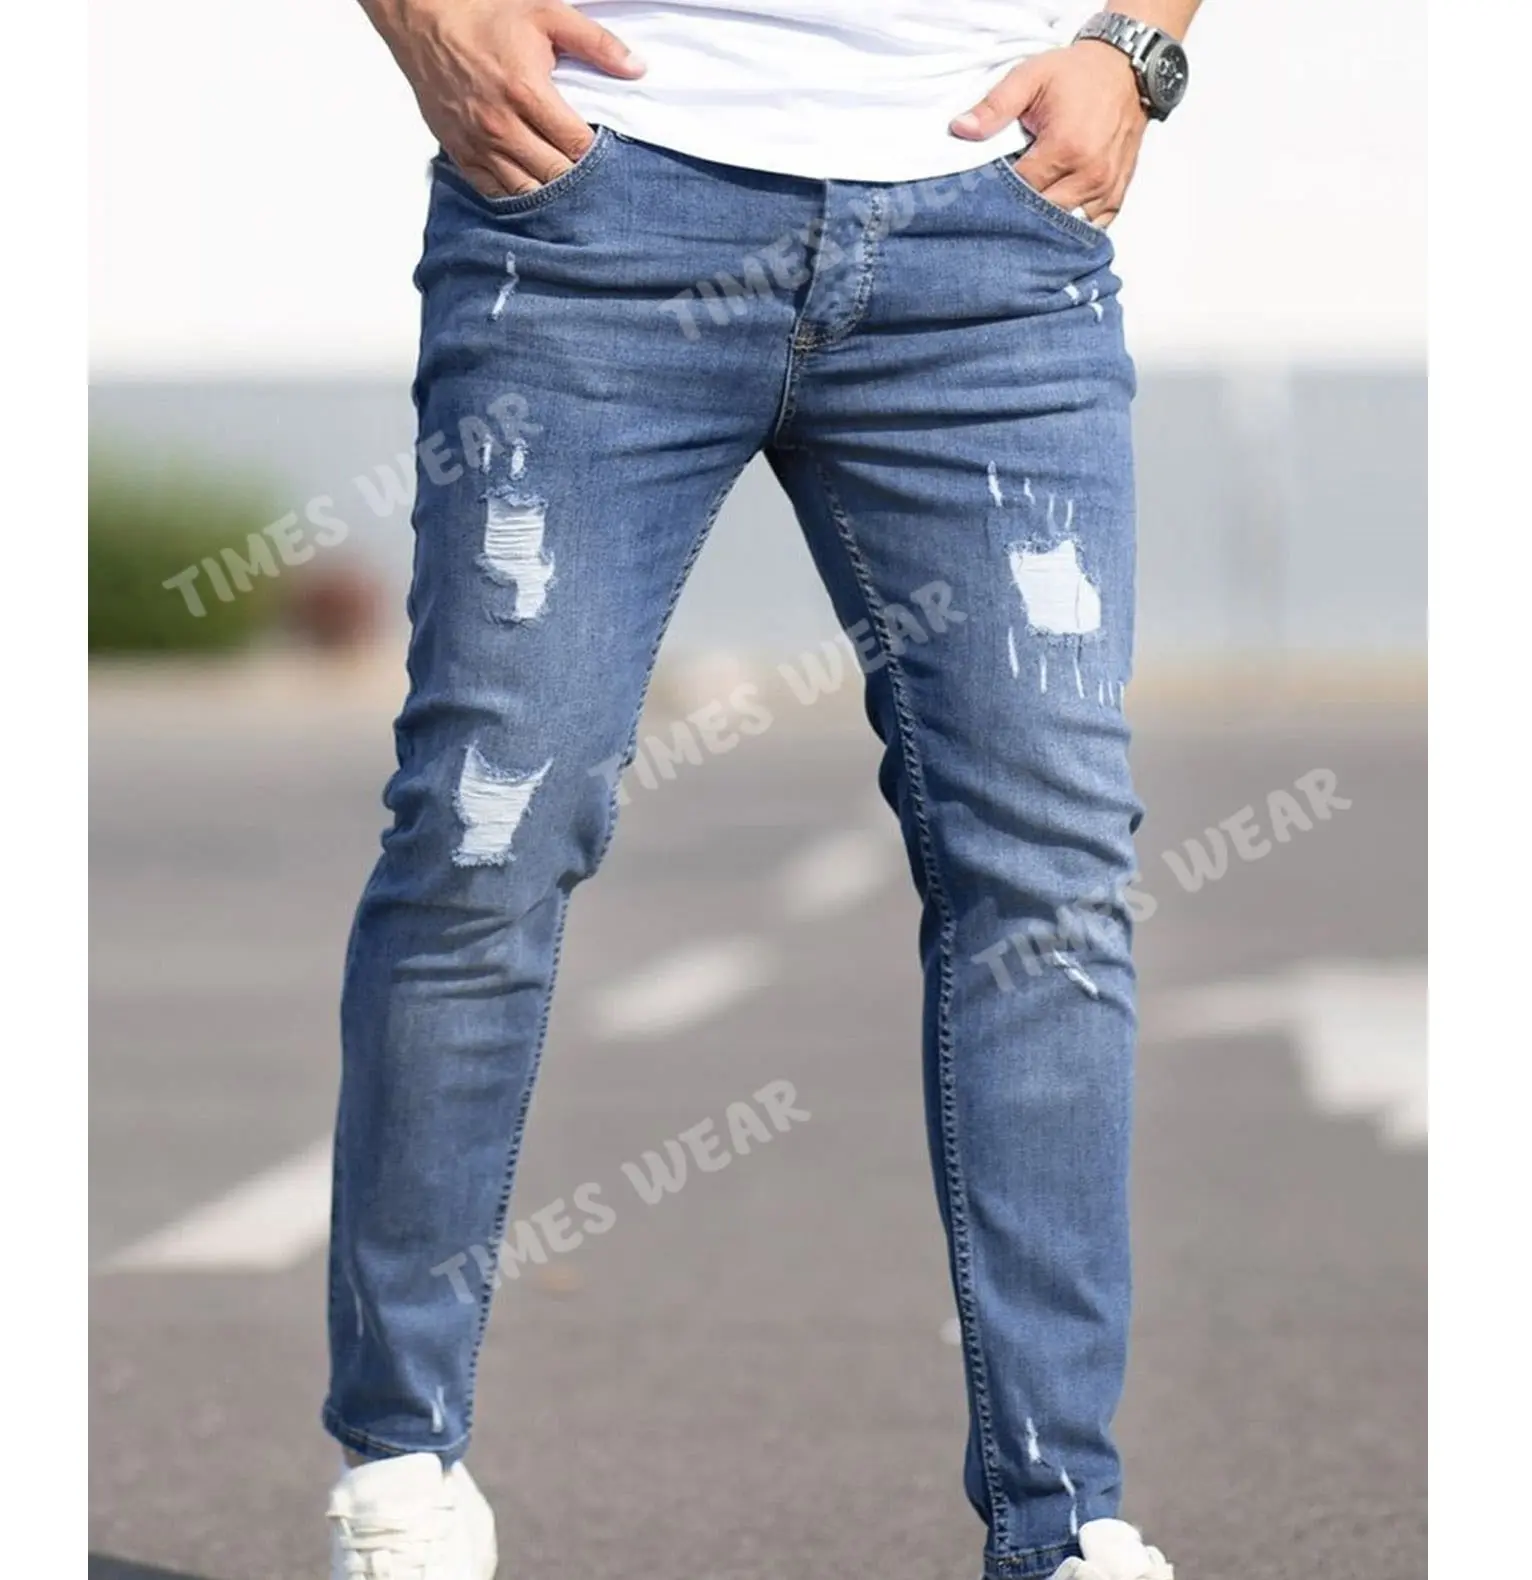 Customized Label Men's Street Fashion Jeans Pant Men Ripped Frayed Skinny Denim Jeans